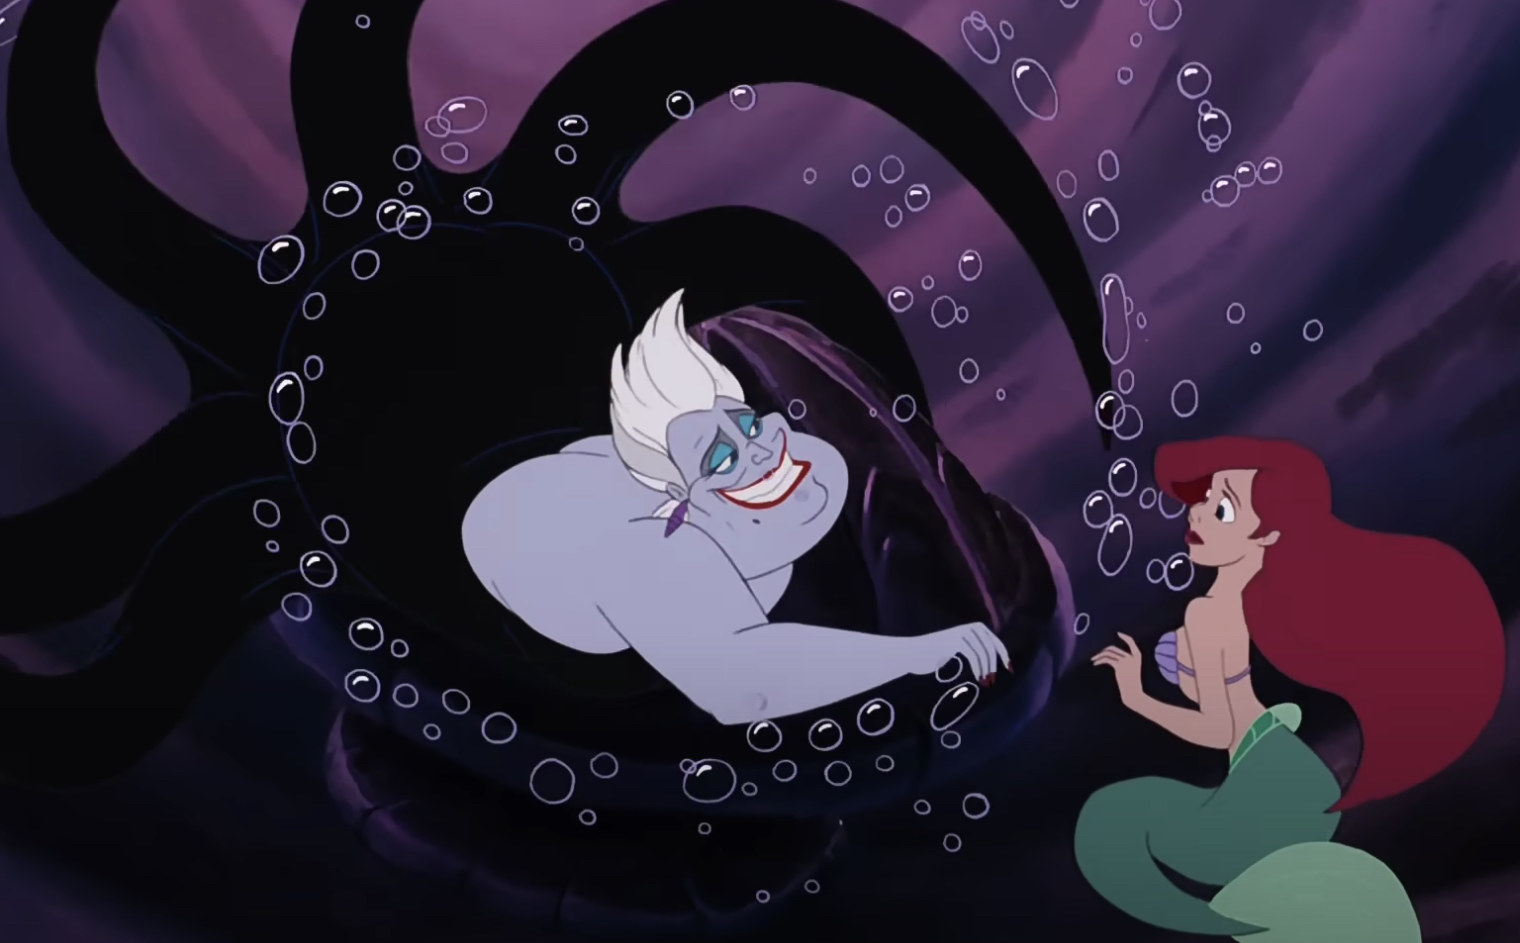 Ursula smiling at Ariel